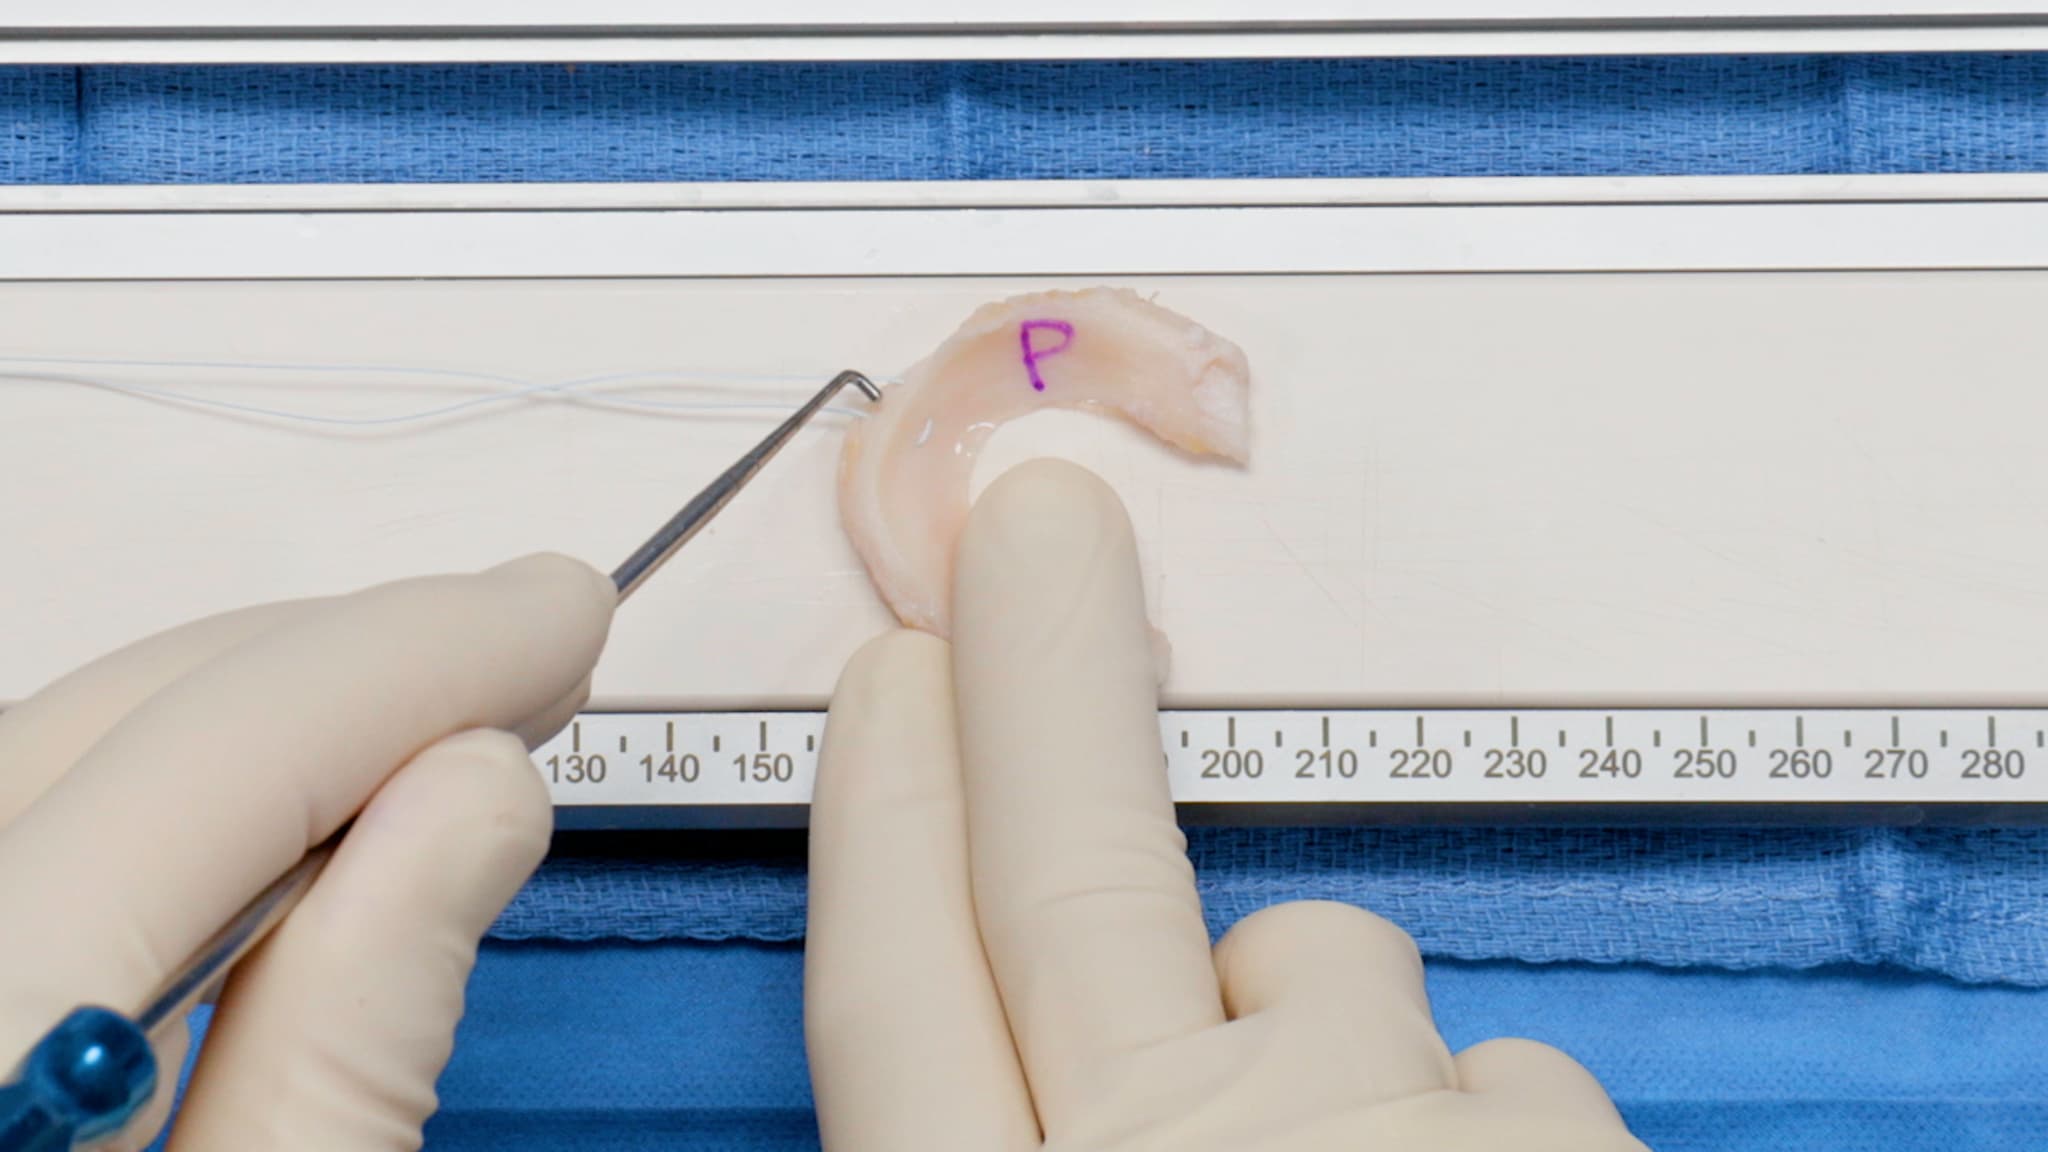 Soft-Tissue Meniscal Allograft Transplantation With SutureLoc™ Implant for Meniscal Root Fixation